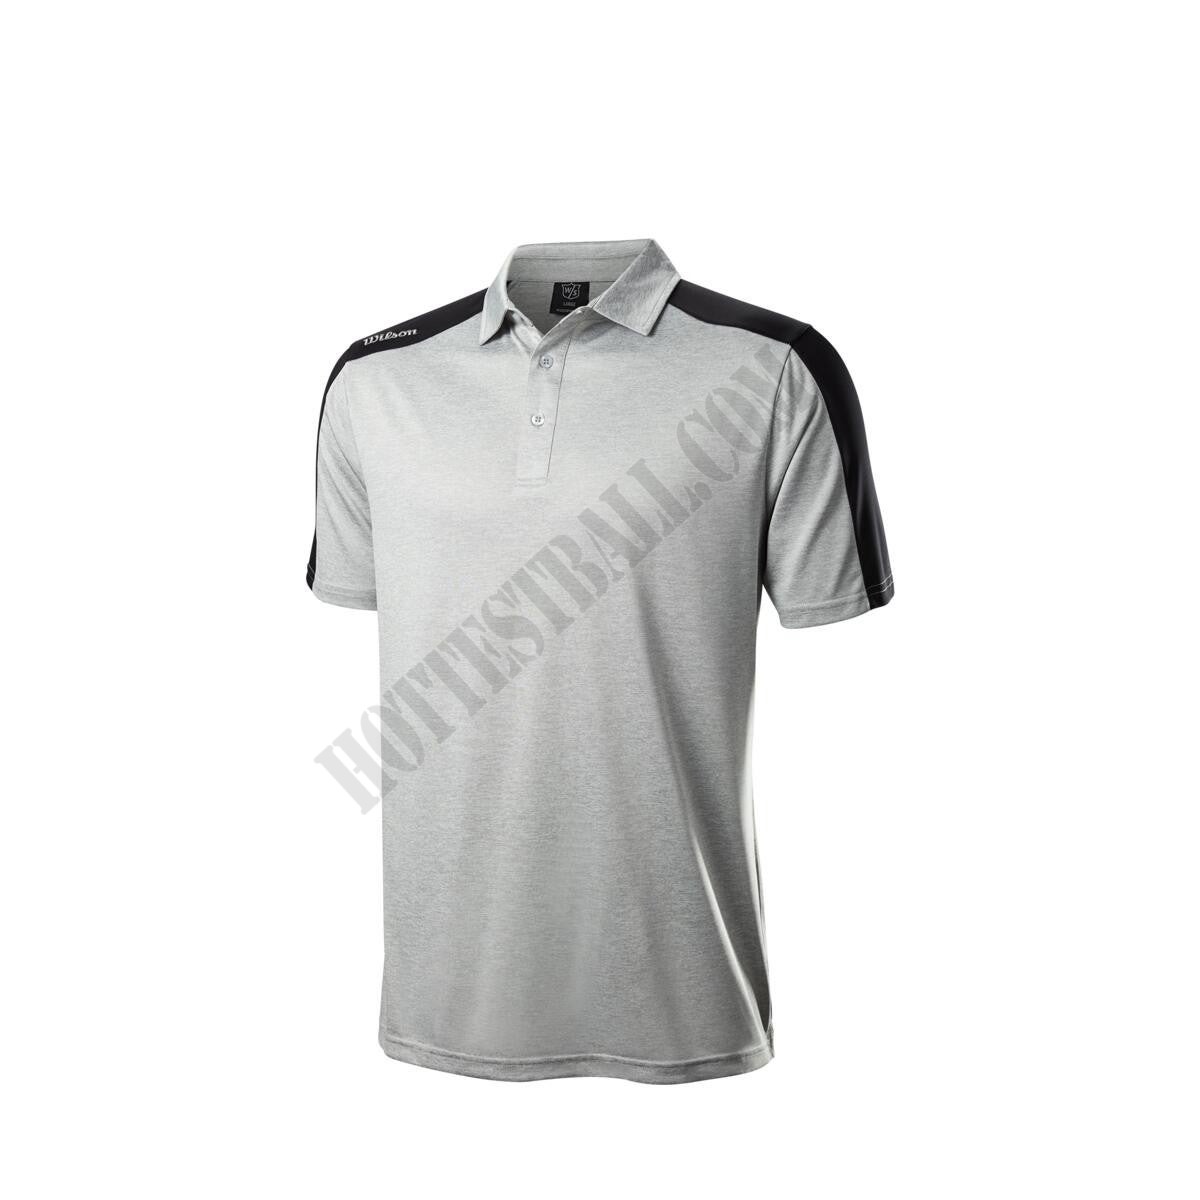 Men's Two-Tone Polo Shirt - Wilson Discount Store - Men's Two-Tone Polo Shirt - Wilson Discount Store